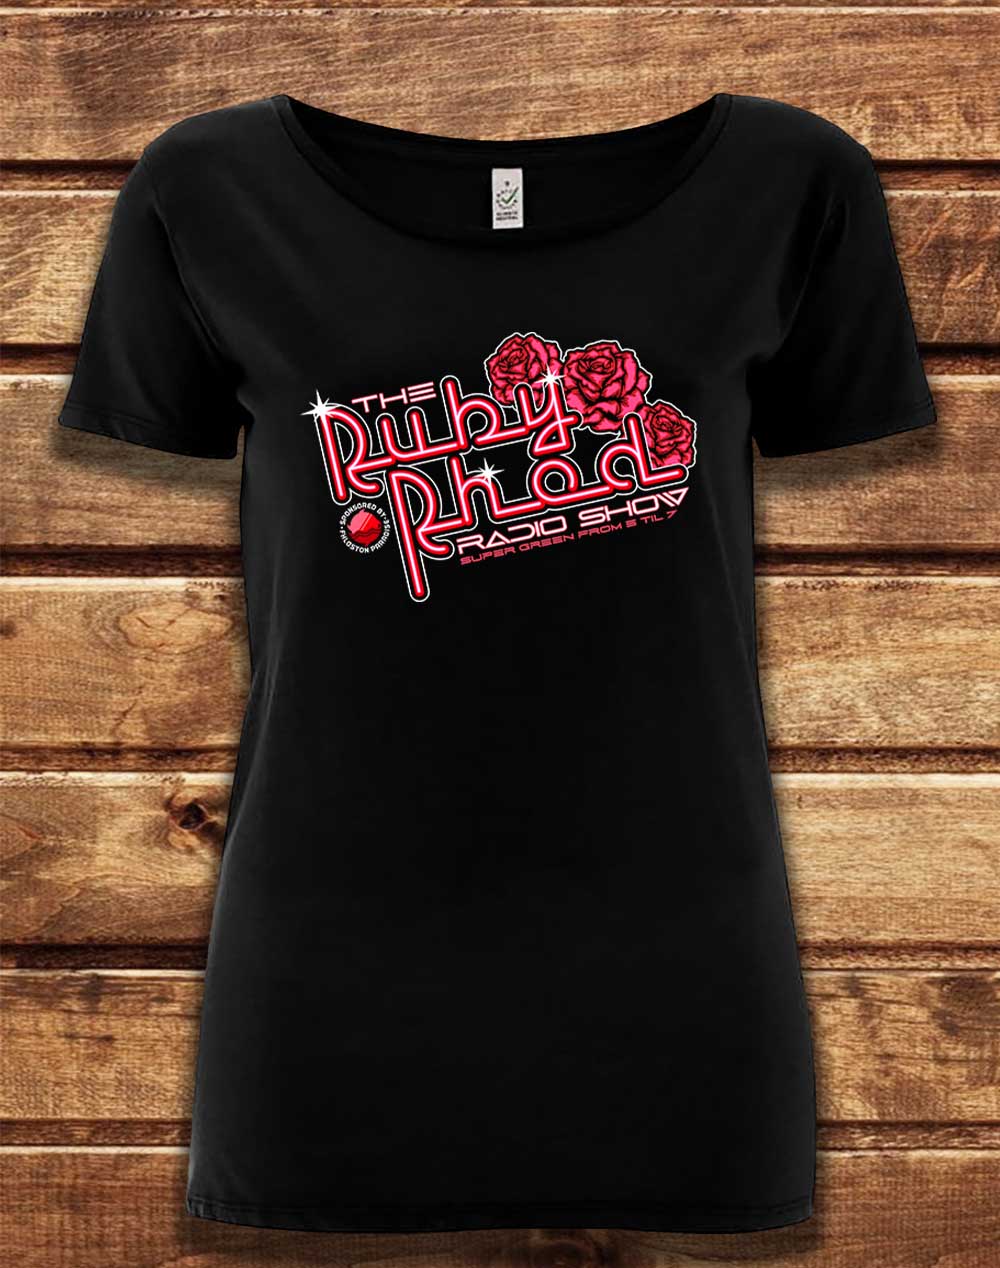 Black - DELUXE Ruby Rhod Radio Show Organic Scoop Neck T-Shirt